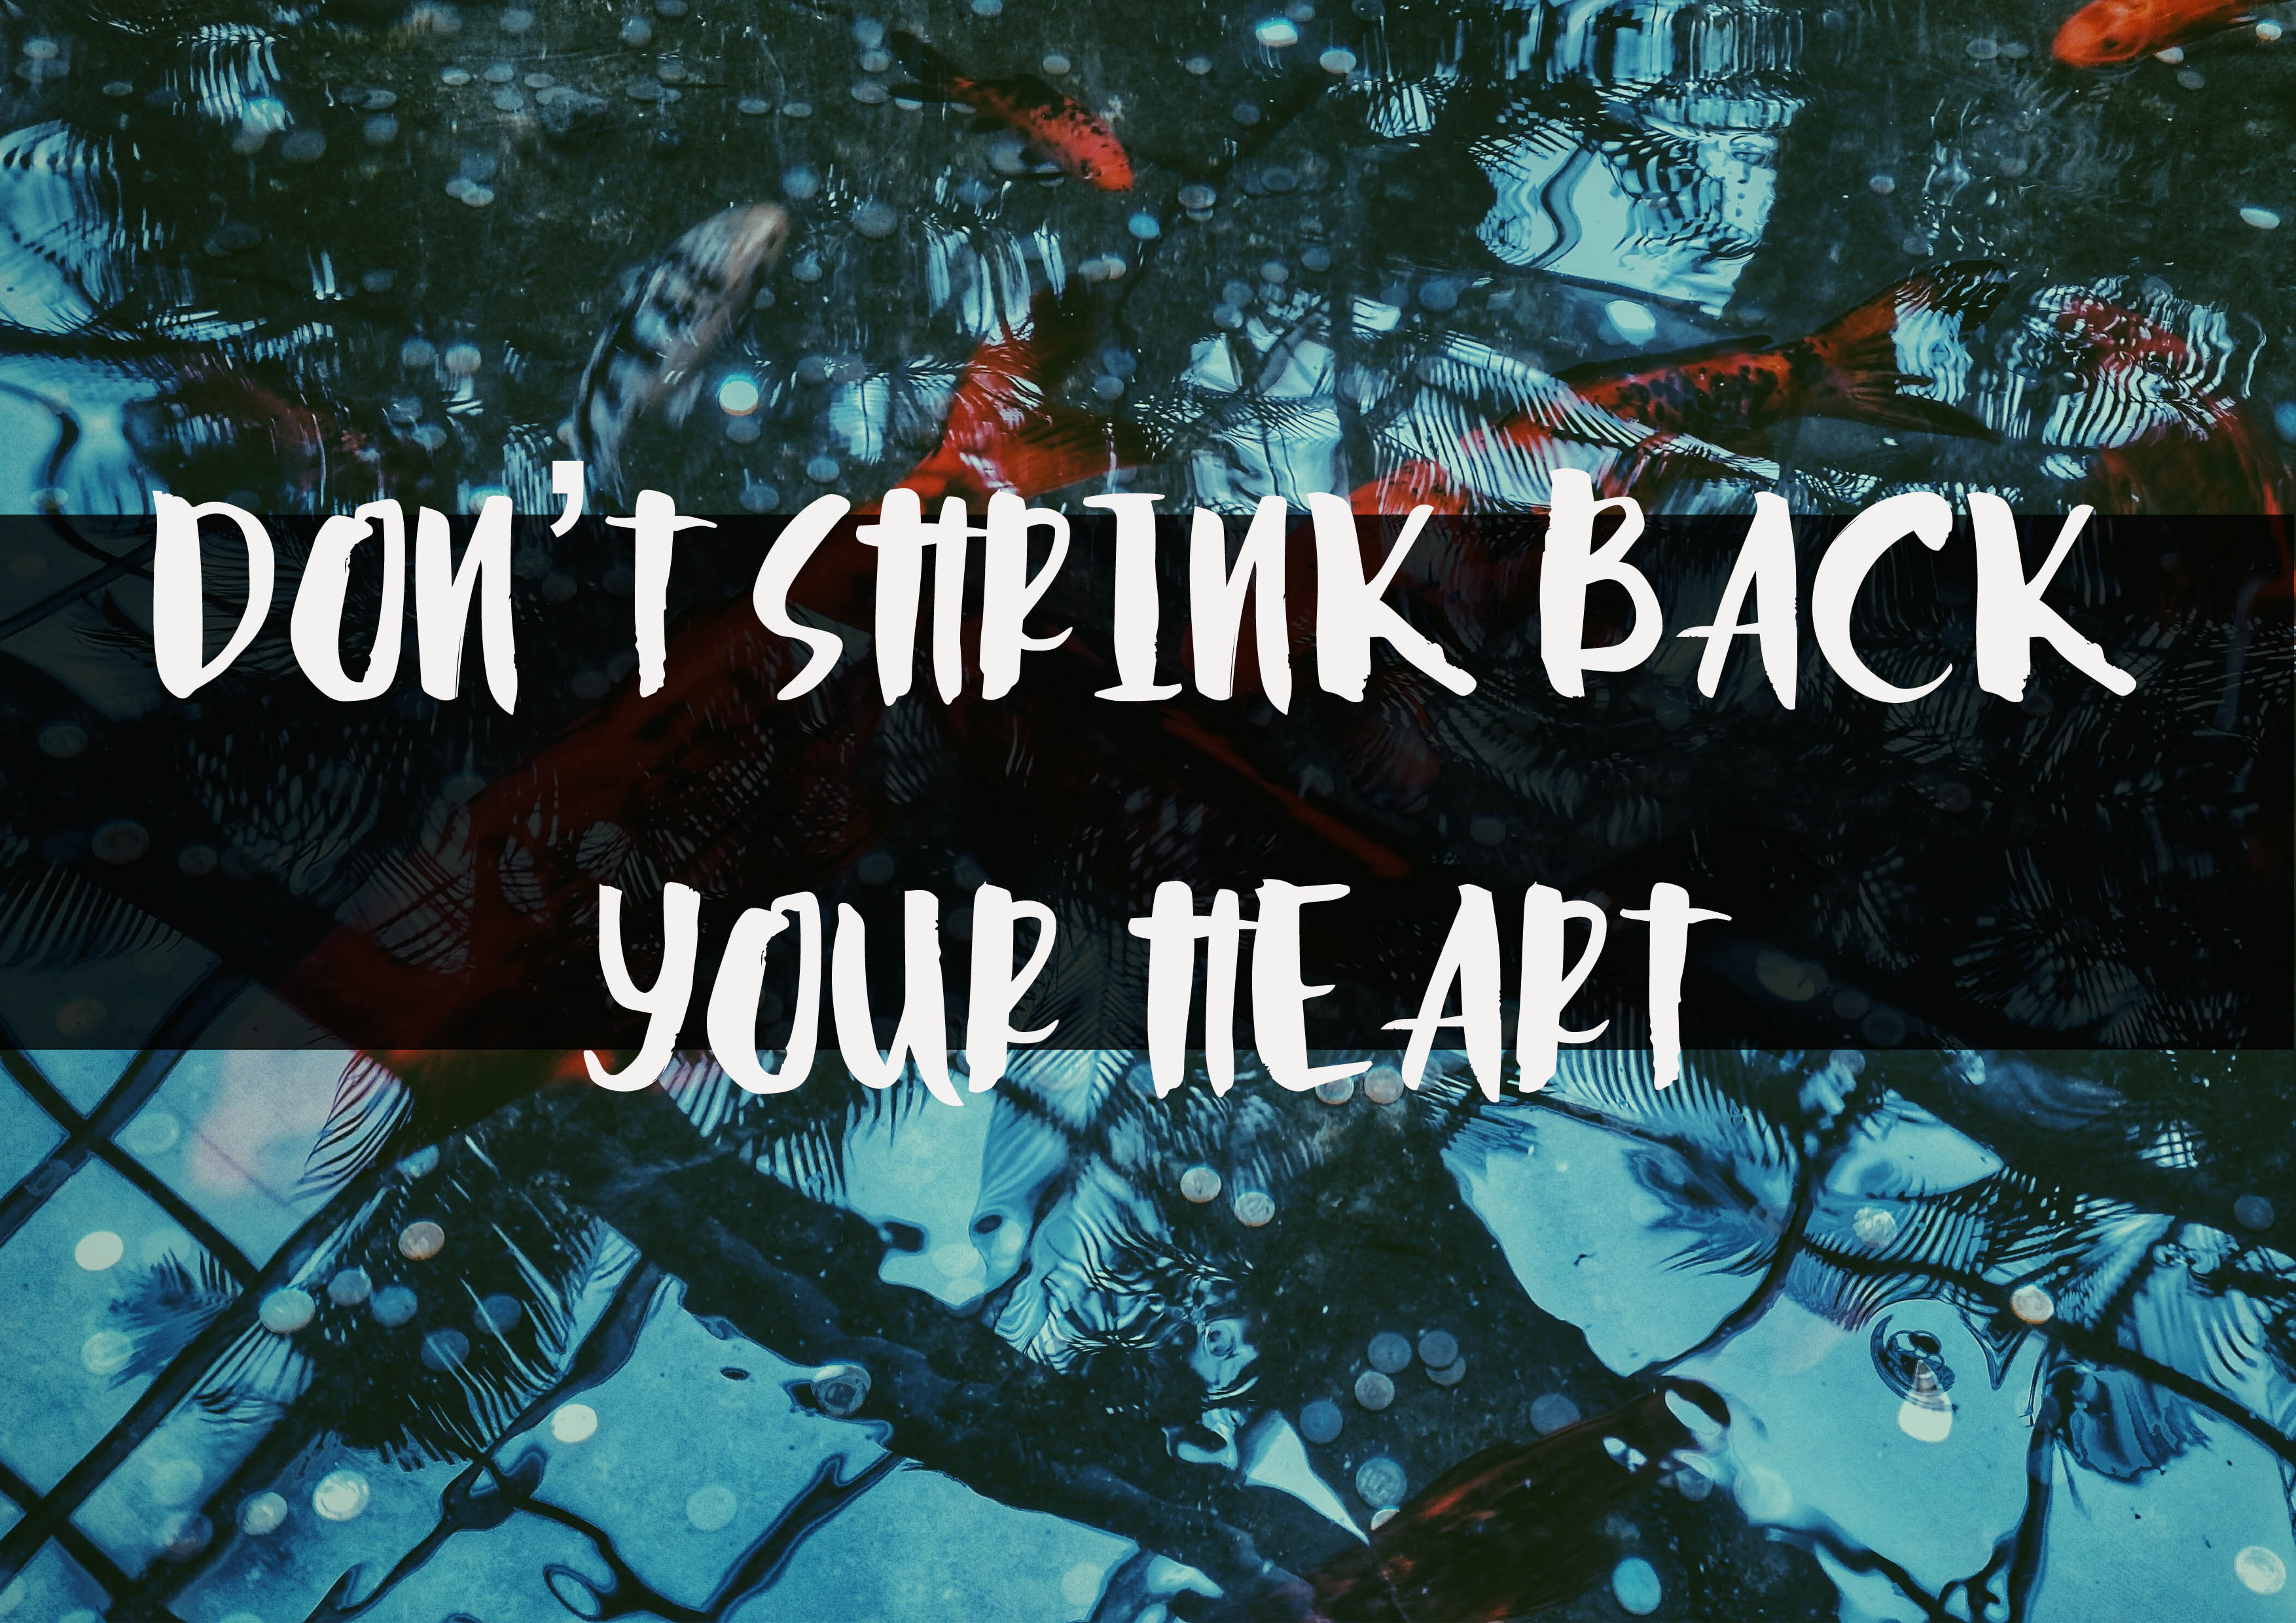 Don't Shrink Back Your Heart